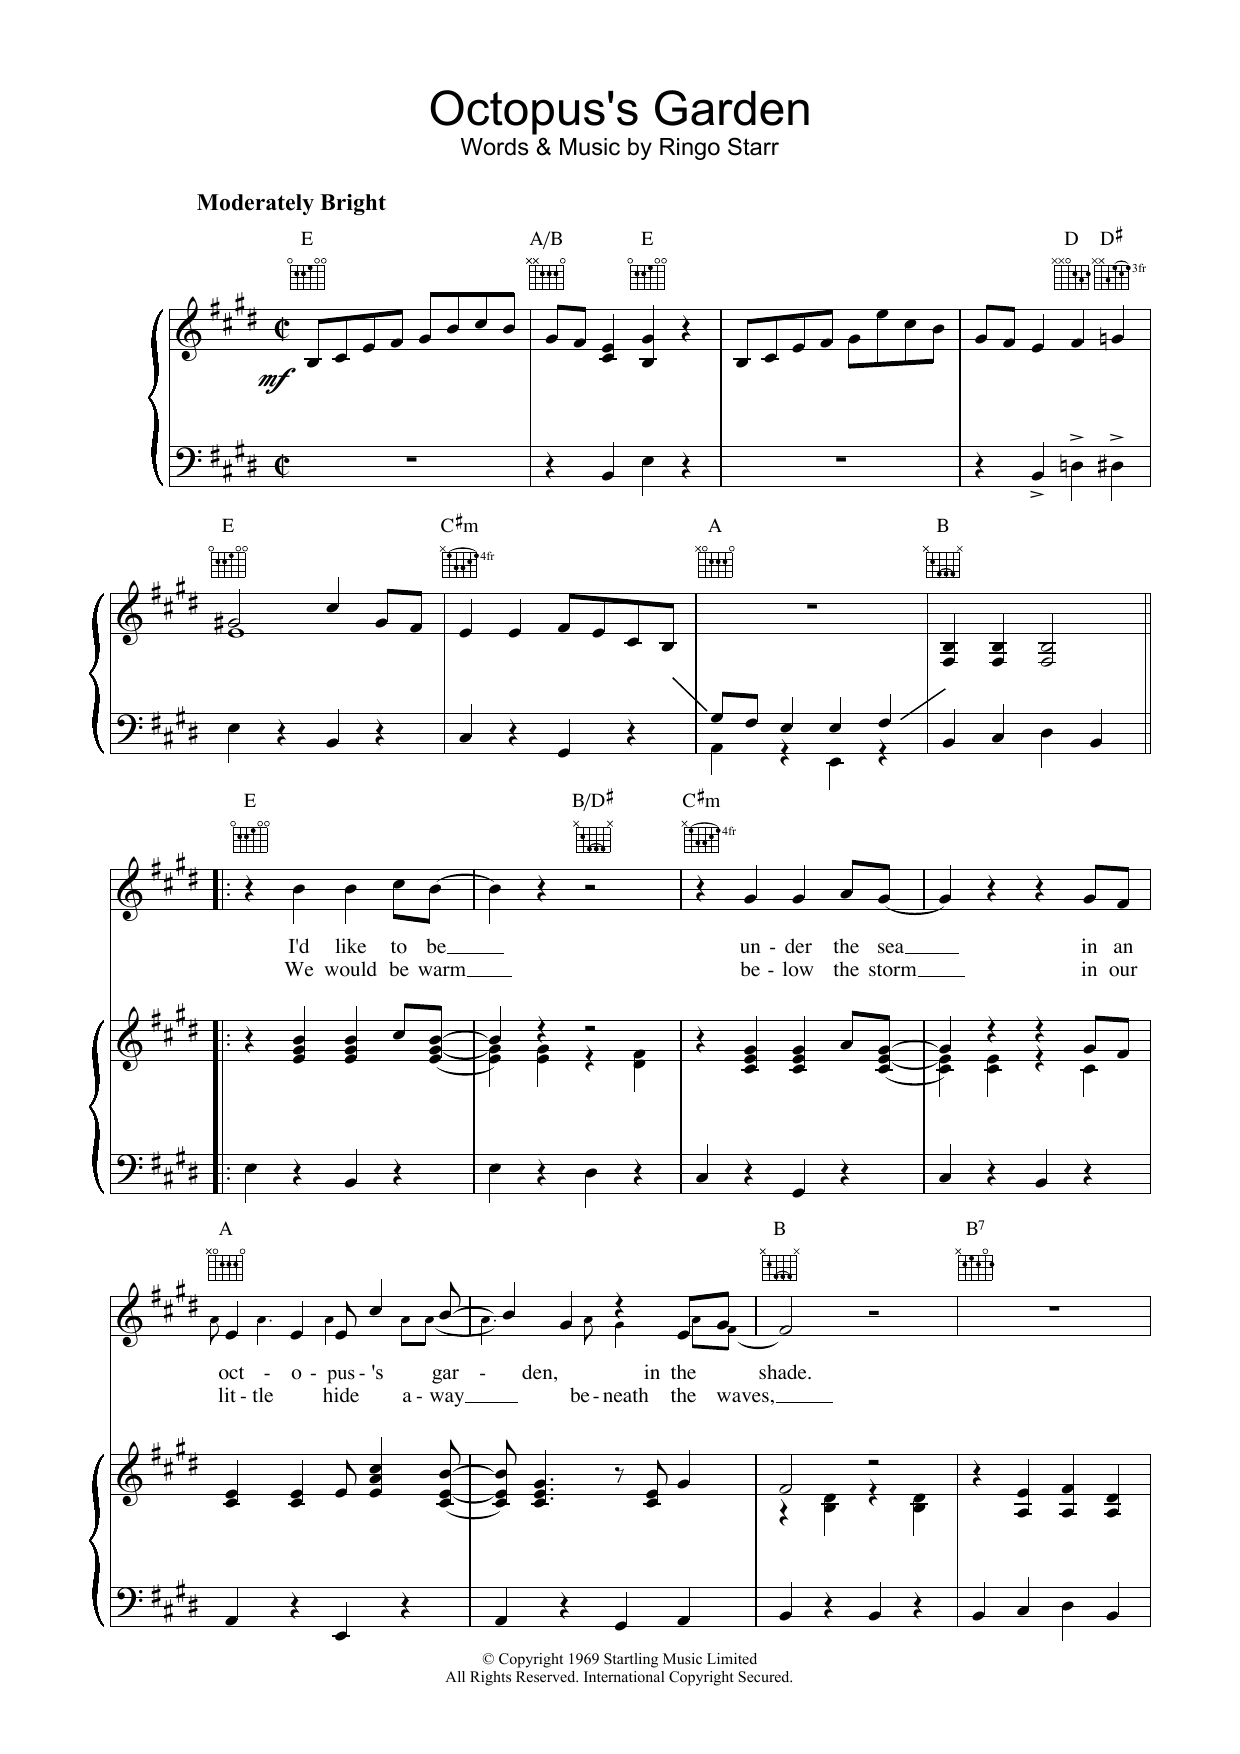 The Beatles Octopus's Garden sheet music notes printable PDF score